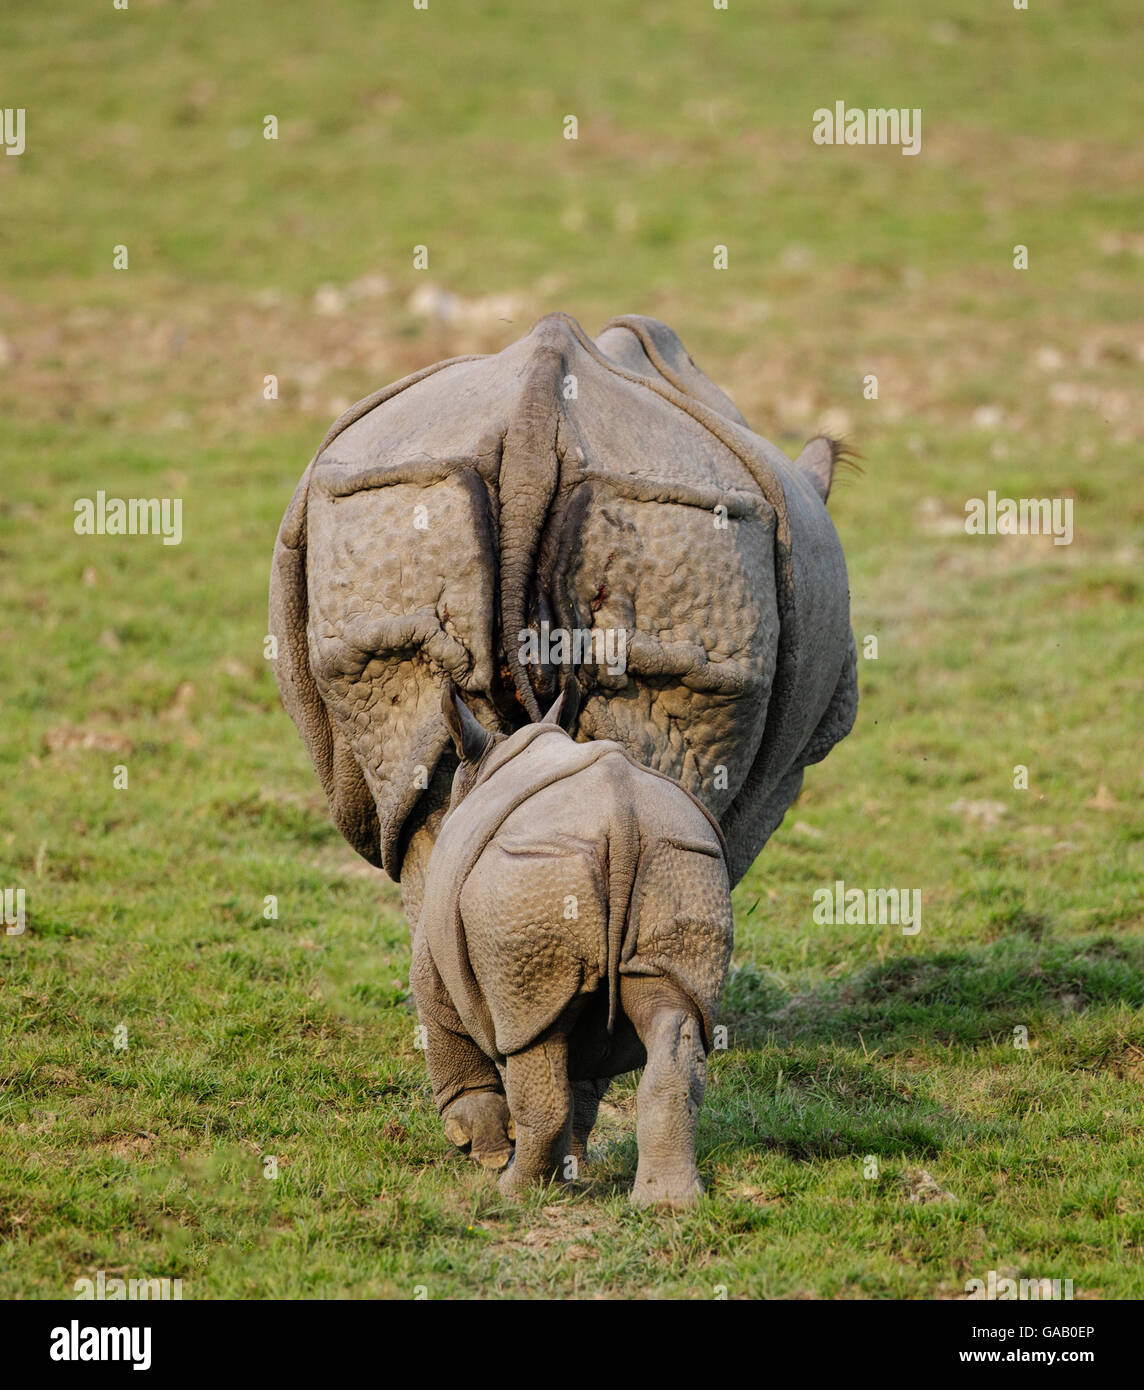 Indian rhinoceros (Rhinoceros unicornis) mother and calf, rear view. Kaziranga National Park, Assam, India. Vulnerable species Stock Photo